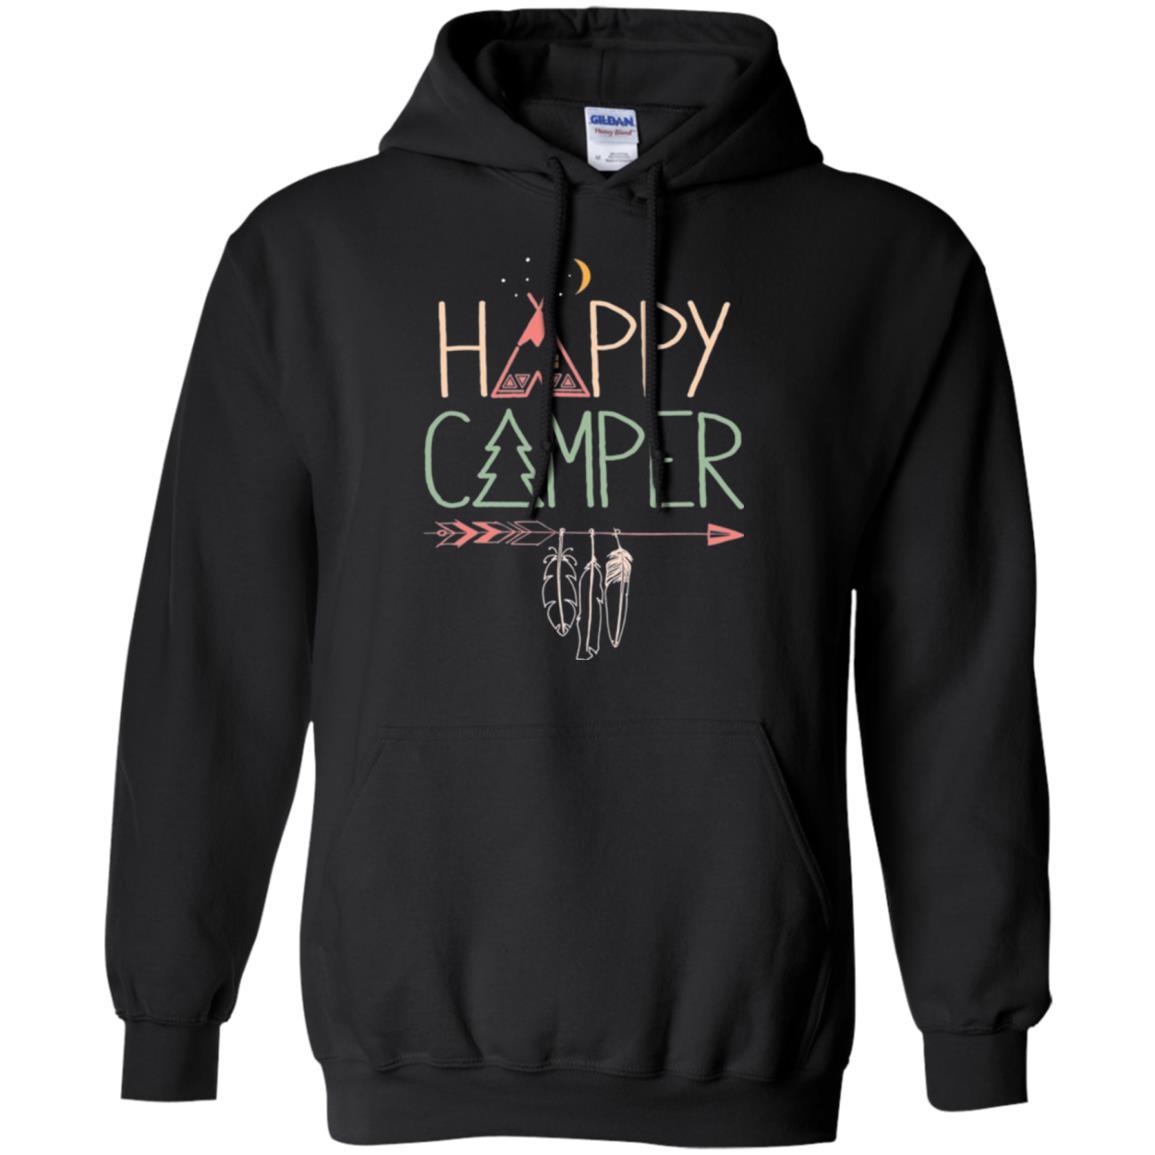 Camper T-shirt Happy Camping